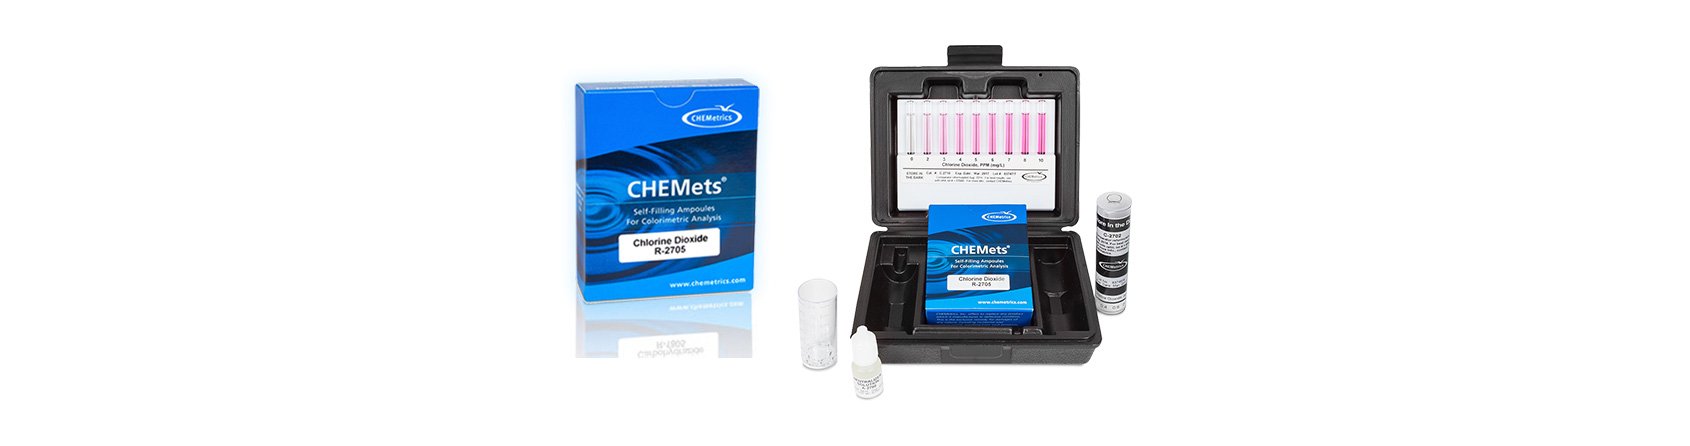 Chlorine Dixoide CHEMets refill box next to Chlorine Dioxide CHEMets test kit